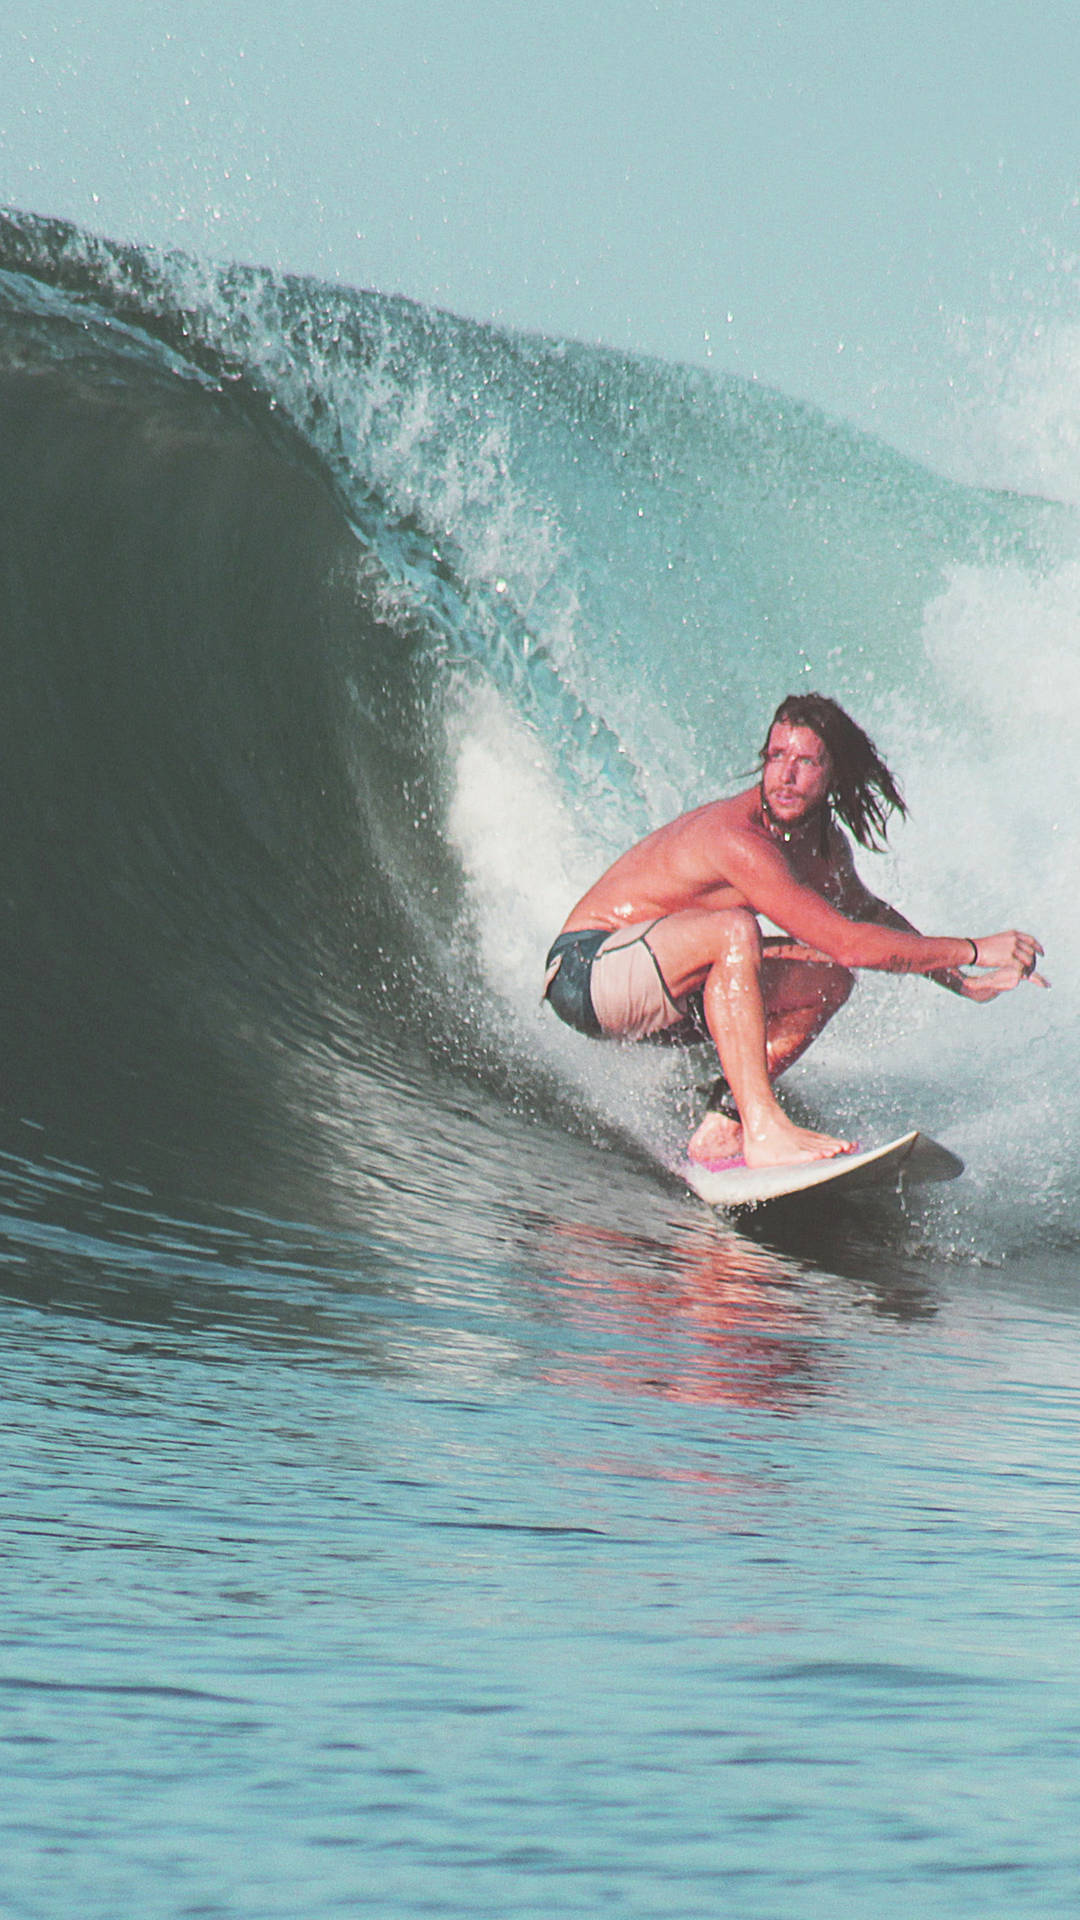 Surfing Squat Position Wallpaper